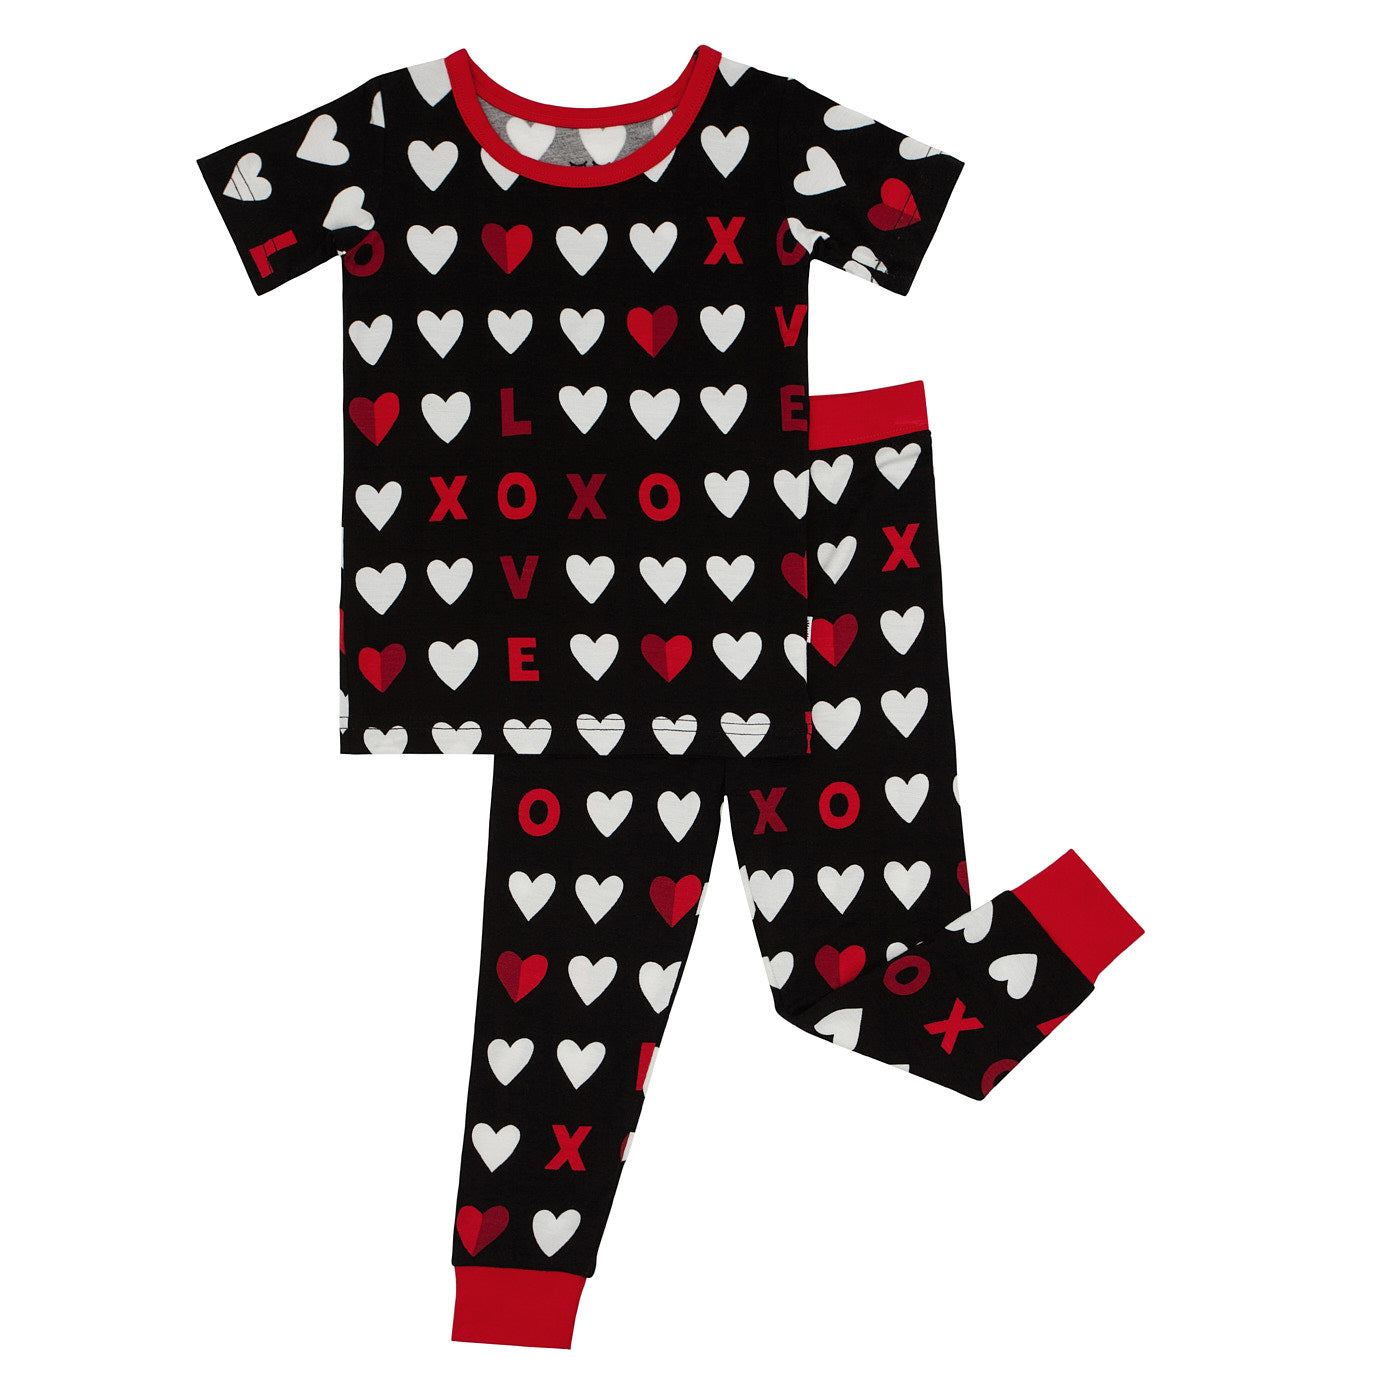 Flat lay image of a Black XOXO two piece short sleeve pajama set